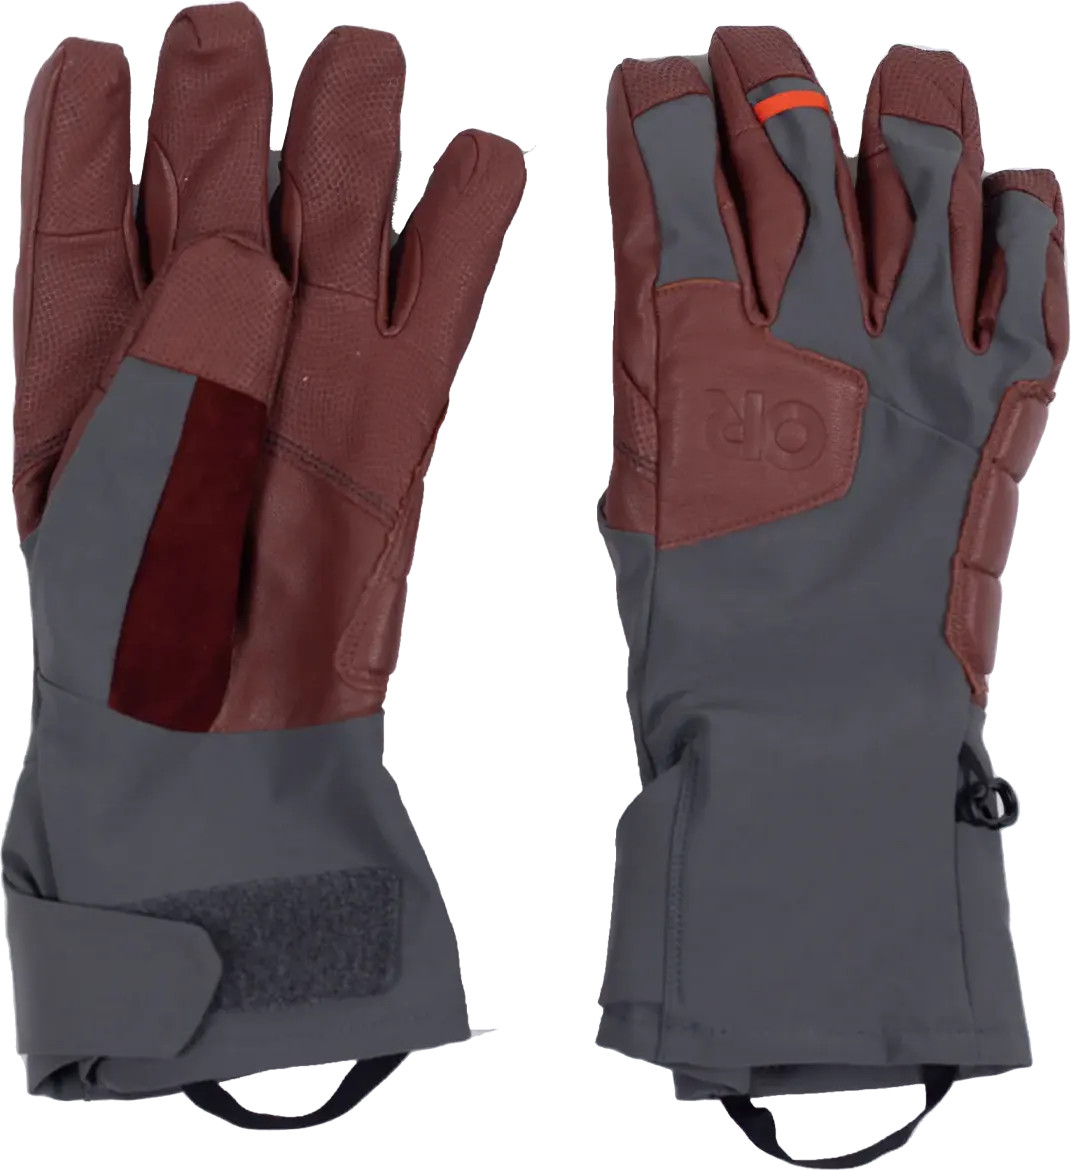 Outdoor Research Men’s Extravert Gloves Charcoal/Brick